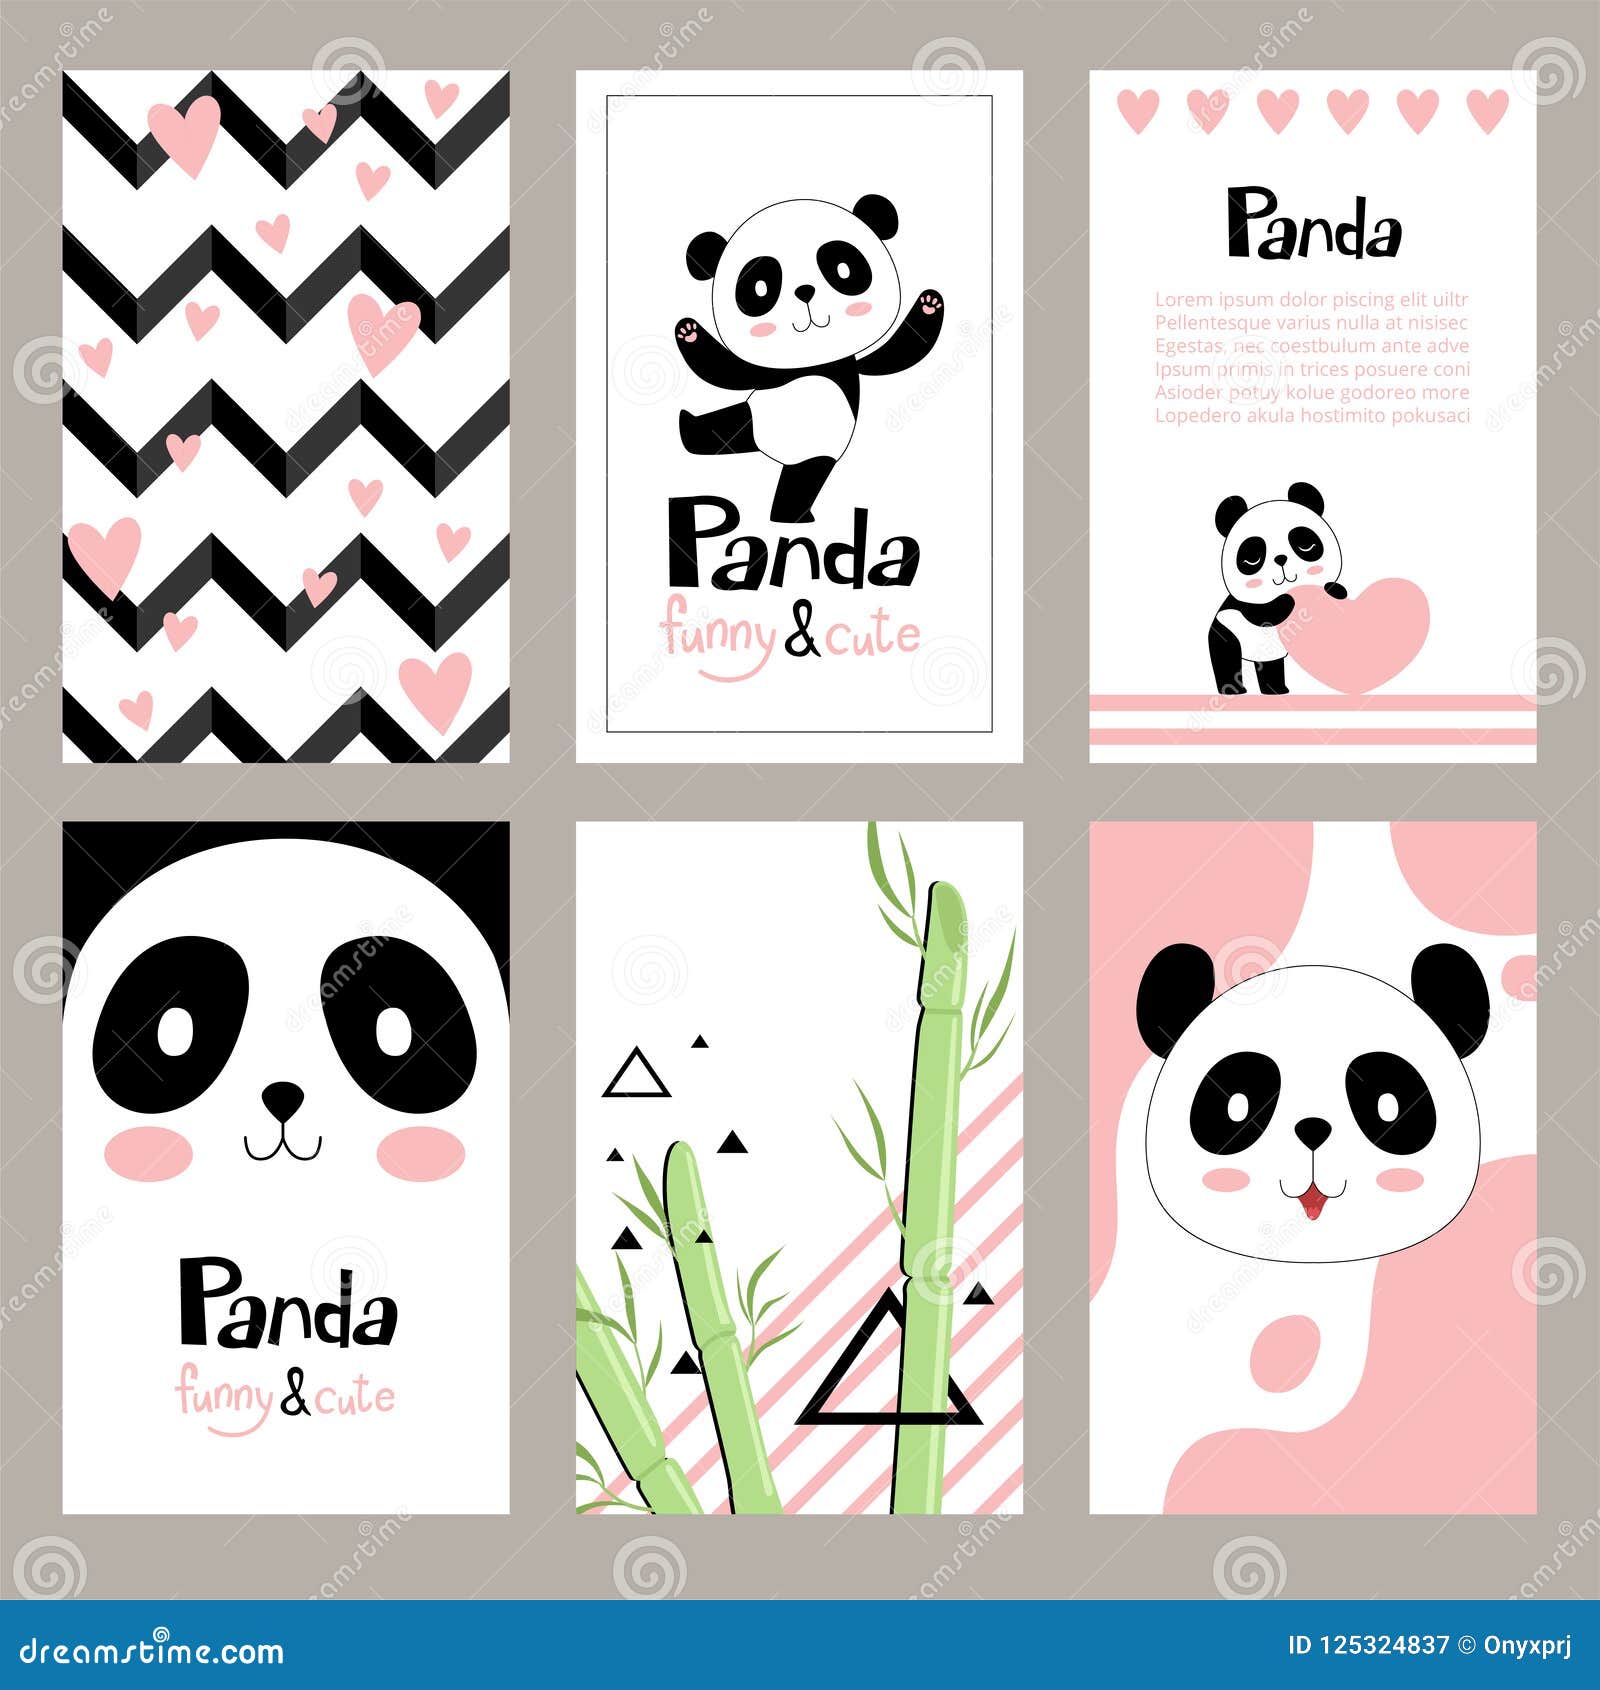 Pandas Invitation Cards Newborn Cute Animals Of Chinese Bear Holiday Vector Placard Design Templates For Kids Stock Vector Illustration Of Cartoon Black 125324837